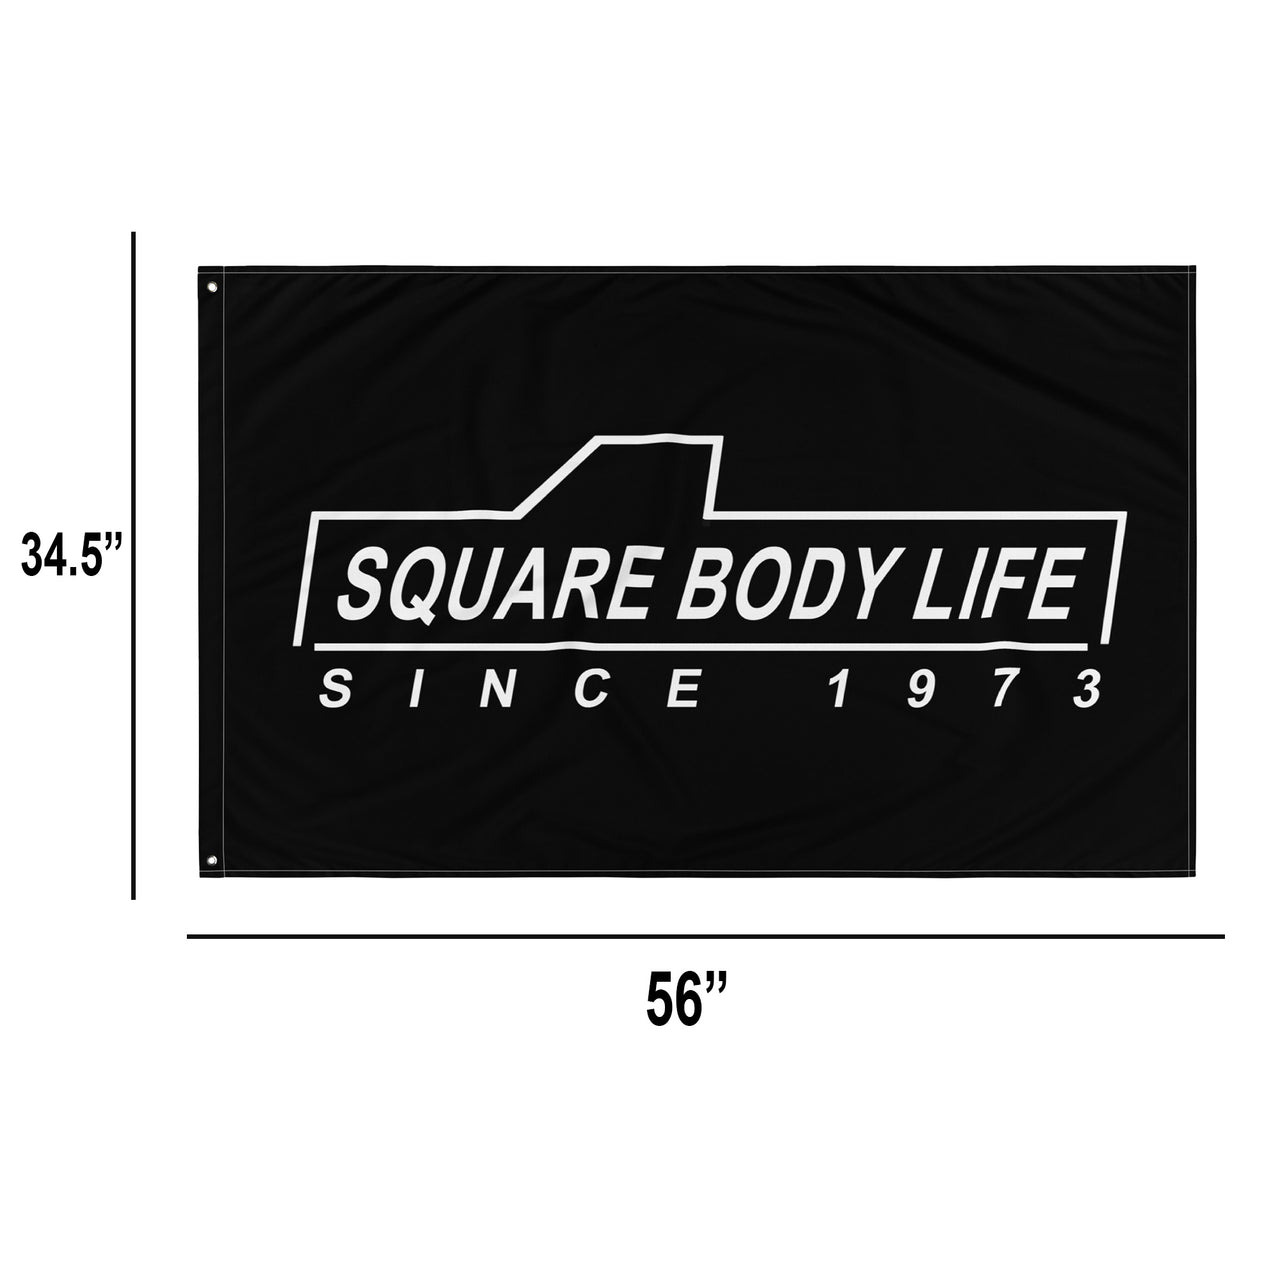 Squarebody Flag - Square Body Life demensions